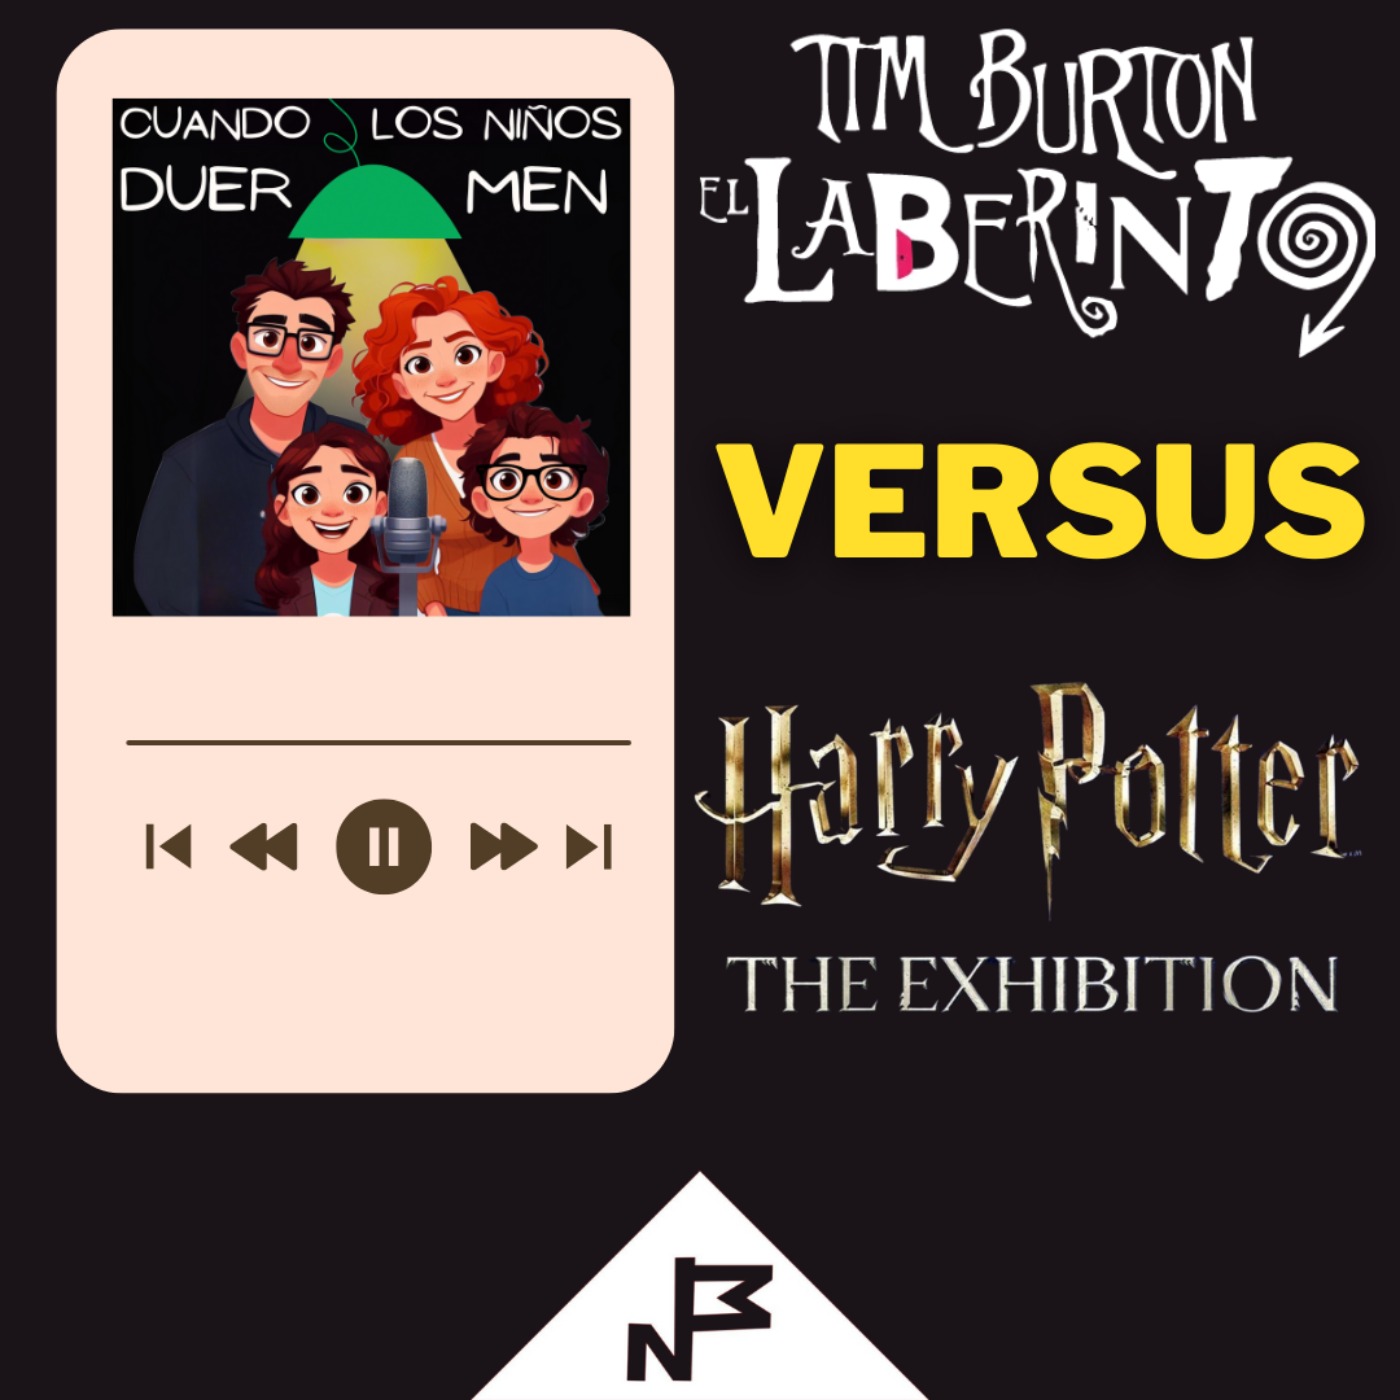 cover art for El laberinto de Tim Burton versus Harry Potter exhibition